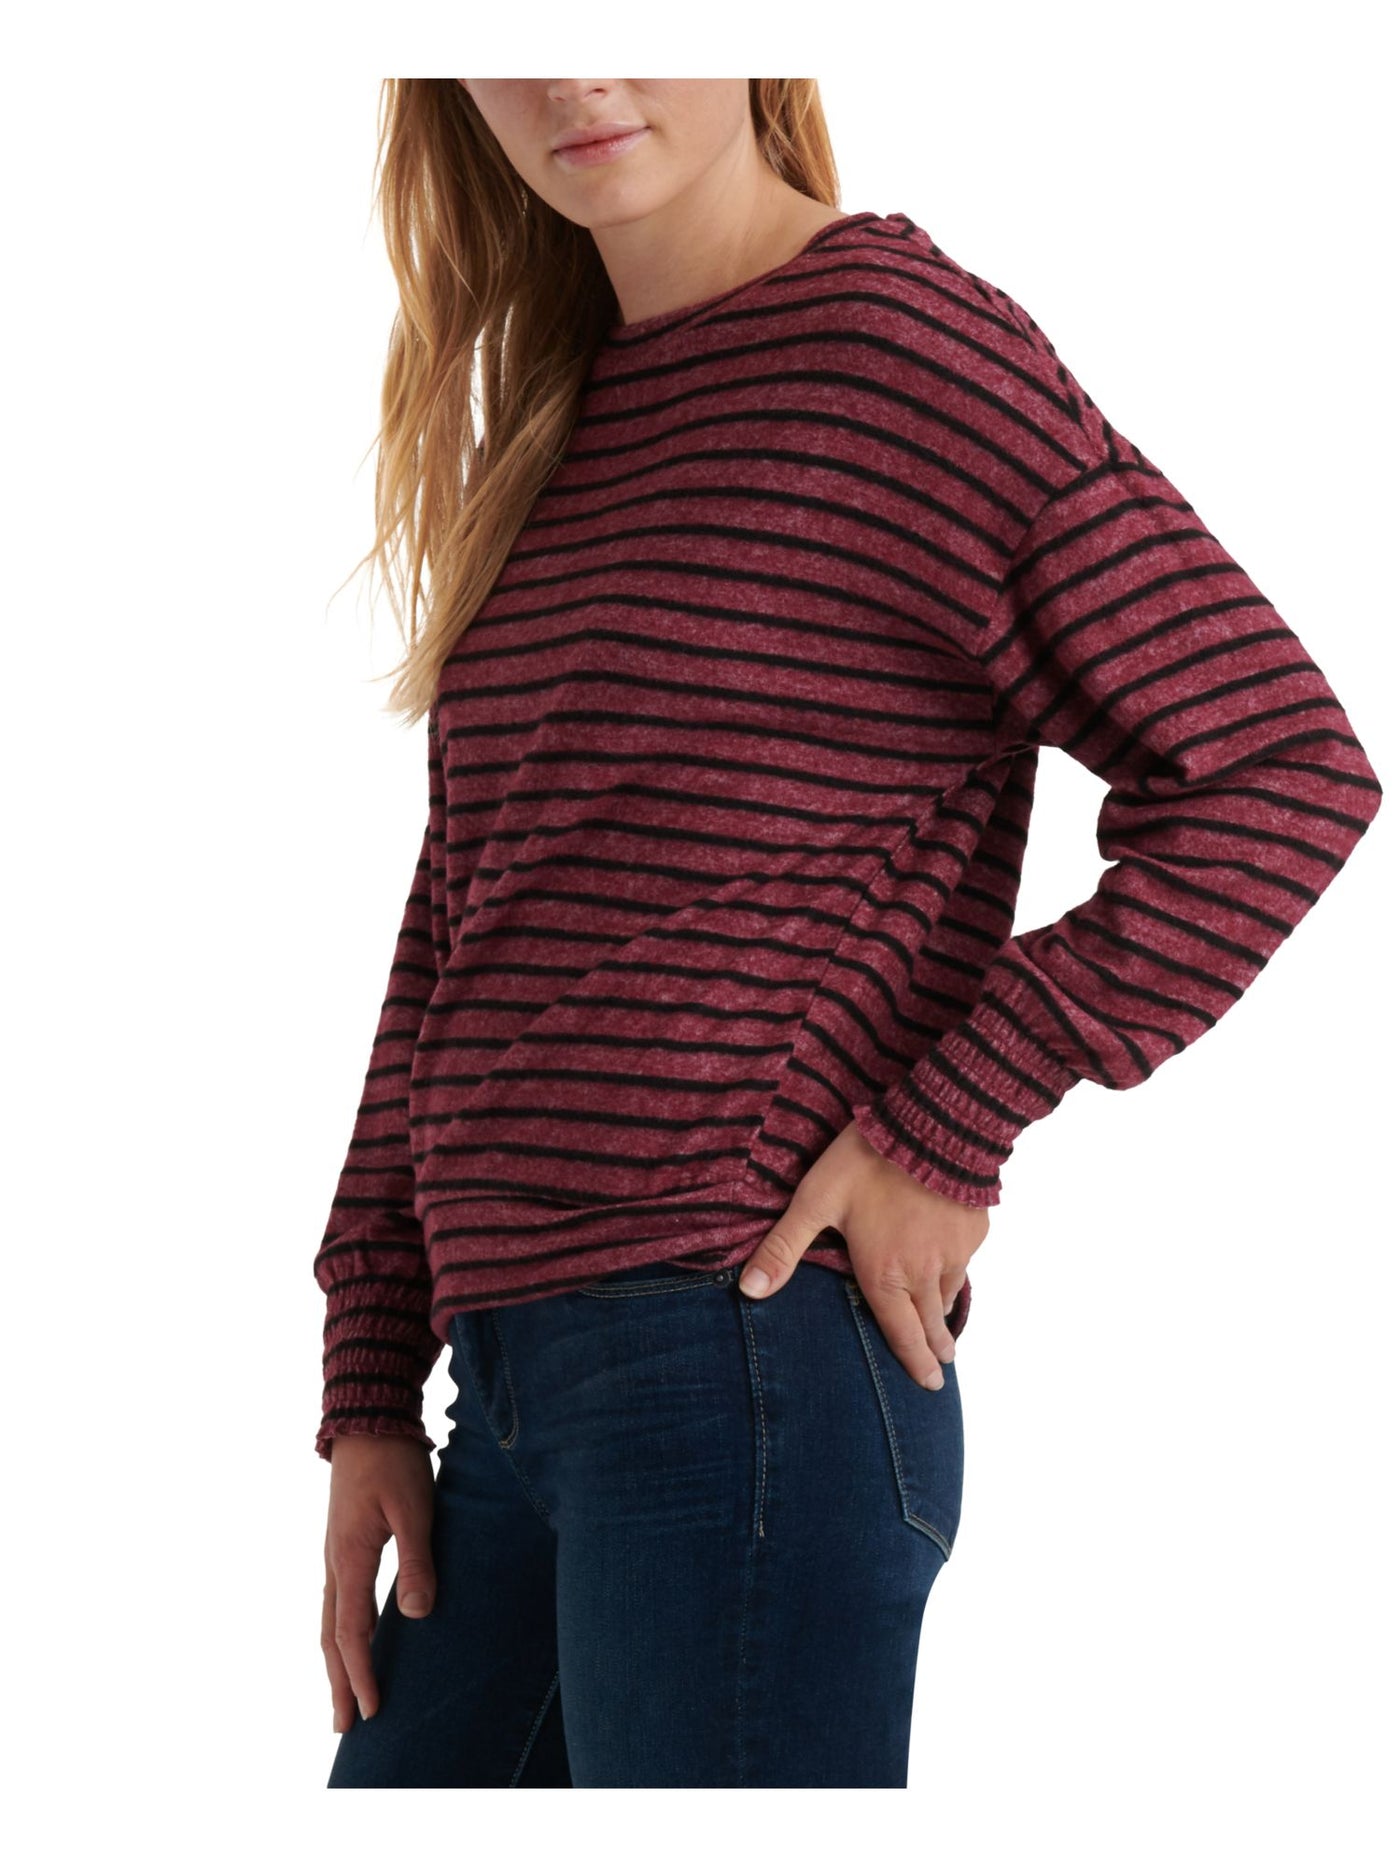 LUCKY BRAND Womens Burgundy Striped Long Sleeve Crew Neck Sweater M